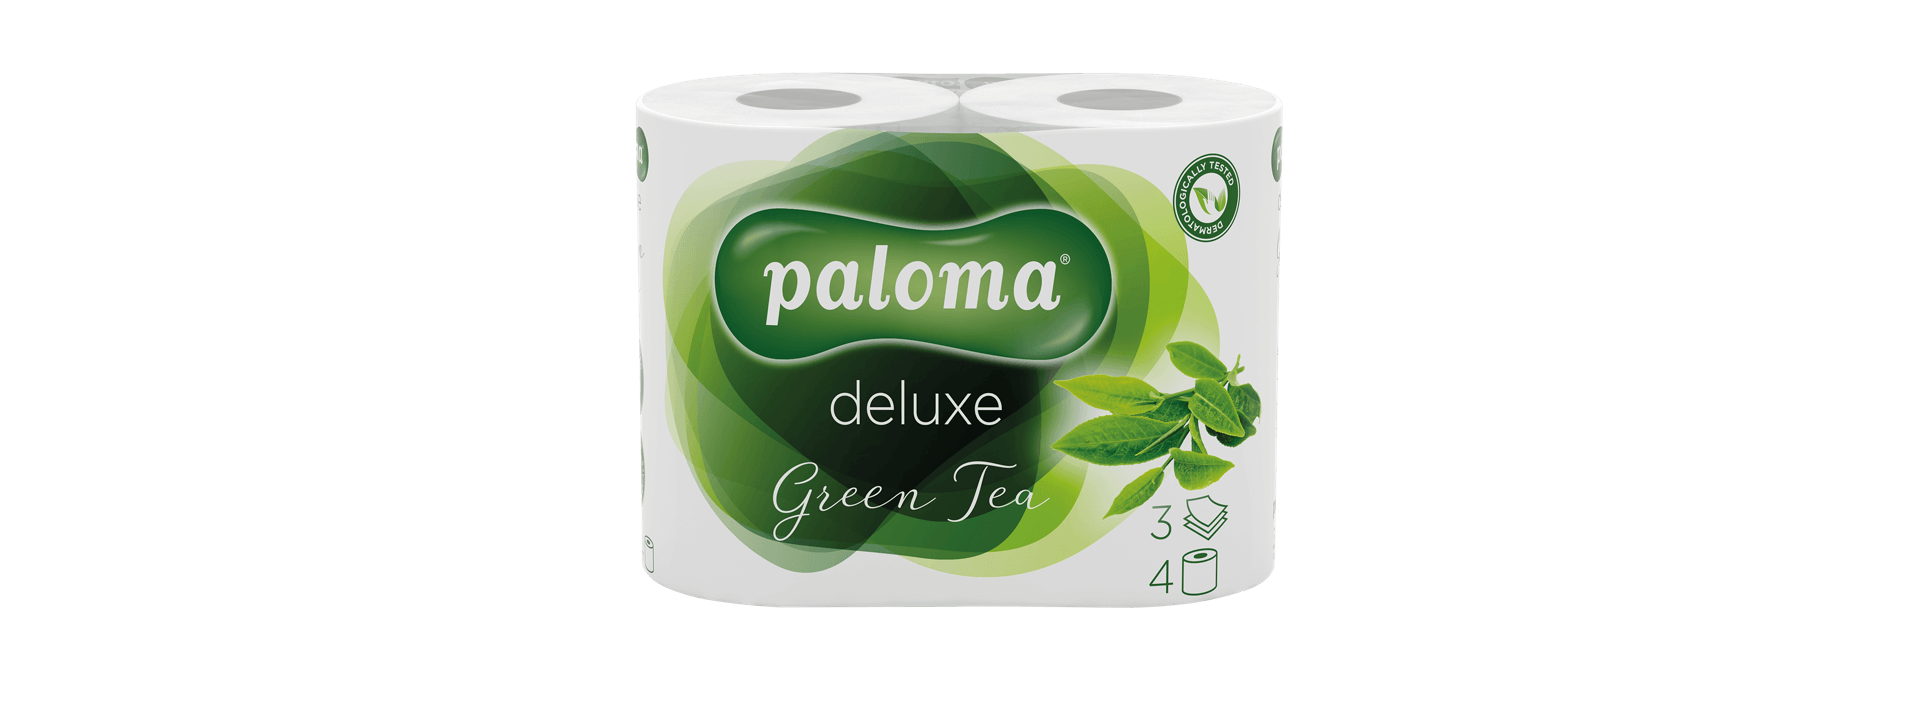 paloma-deluxe-green-tea-4